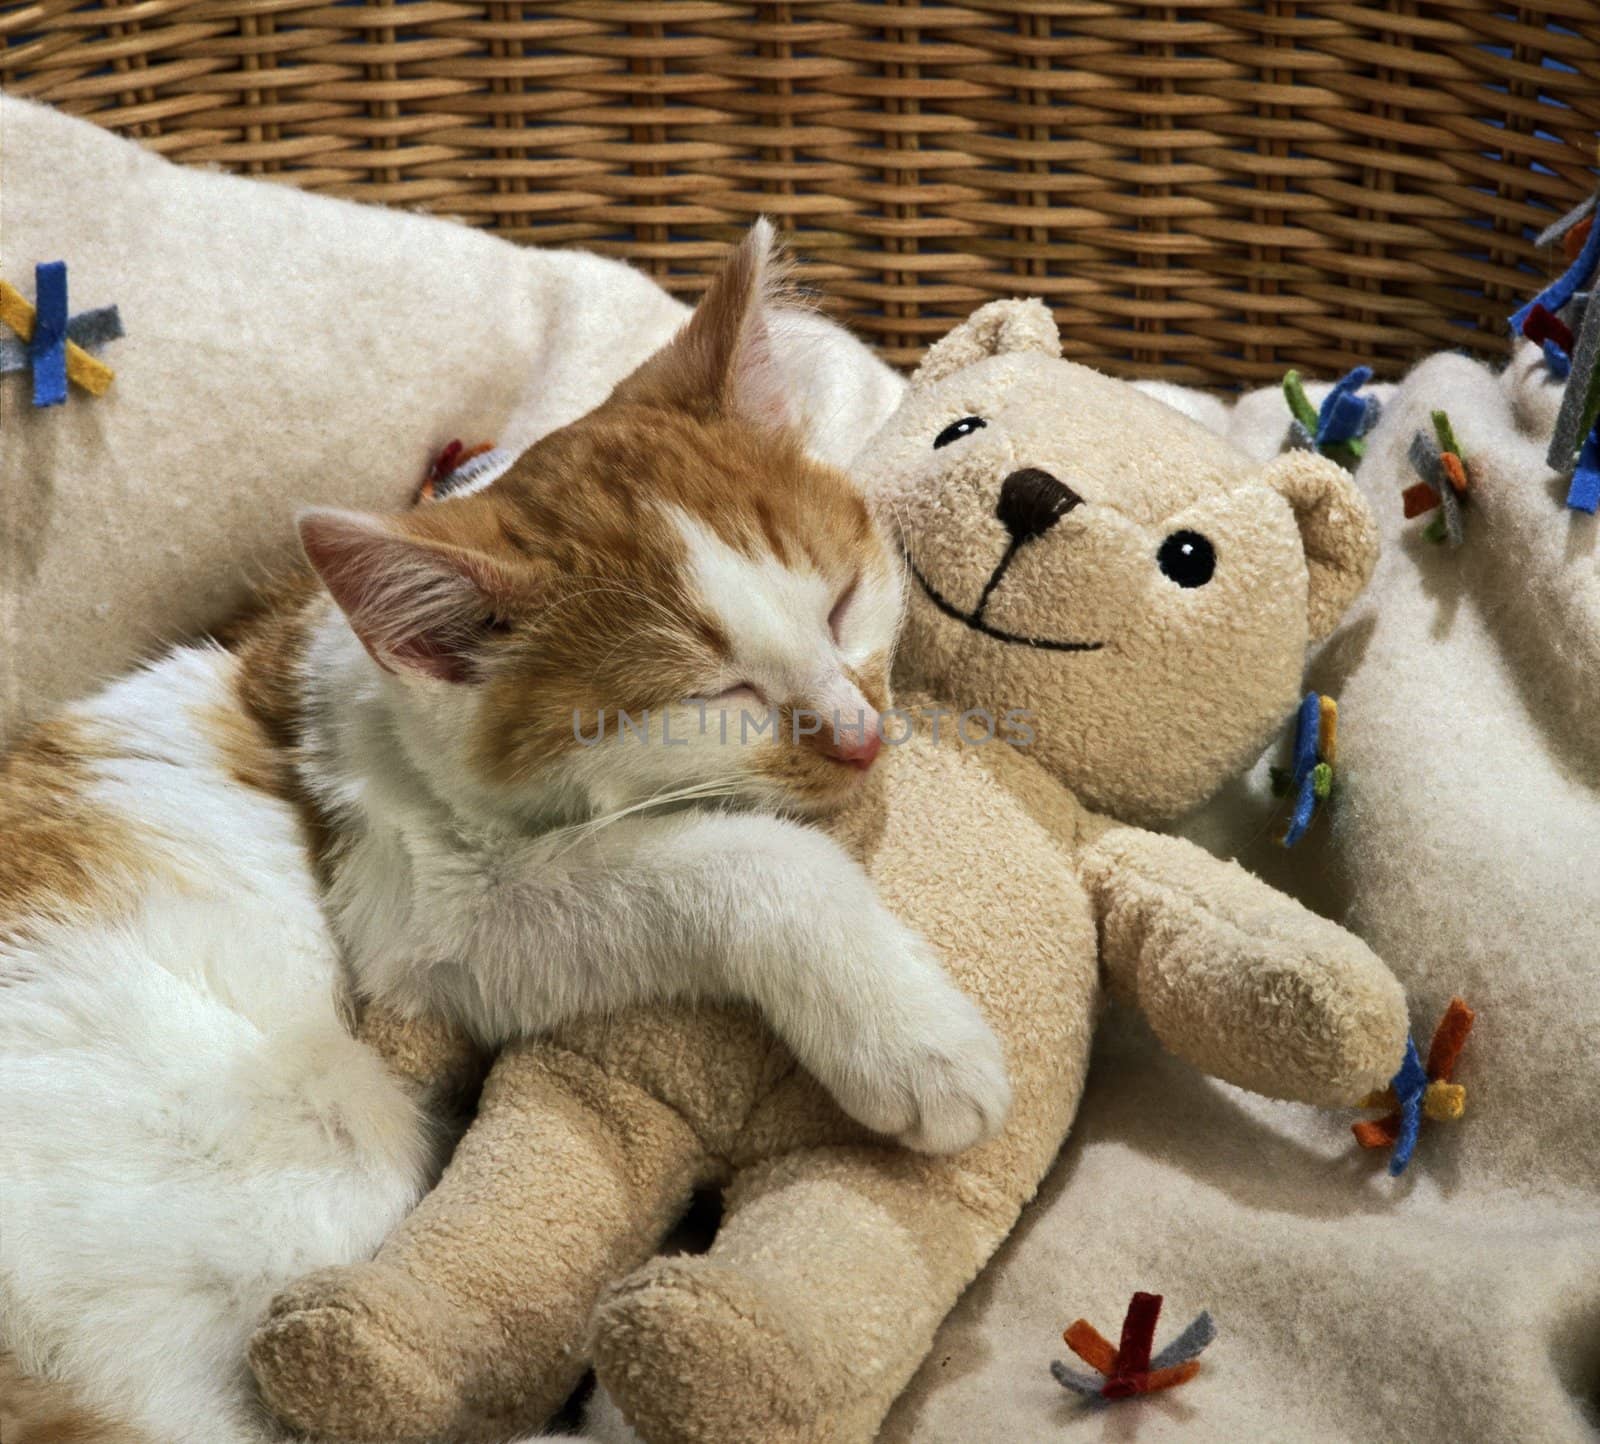 cat sleeping with teddy bear